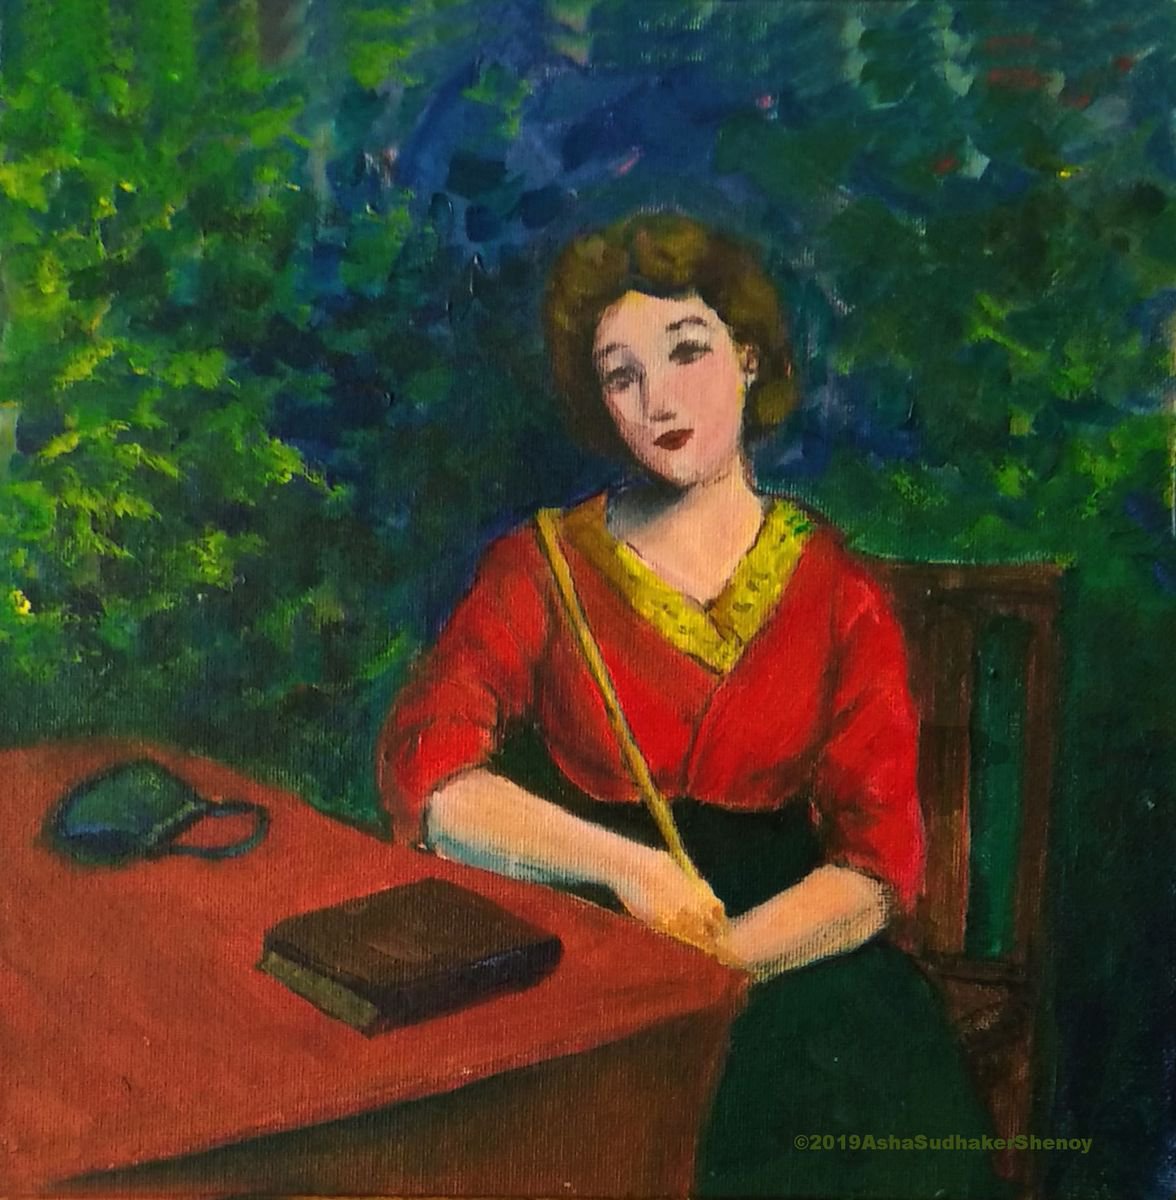 Woman Waiting  Acrylic on canvas panel 10x 10 by Asha Shenoy